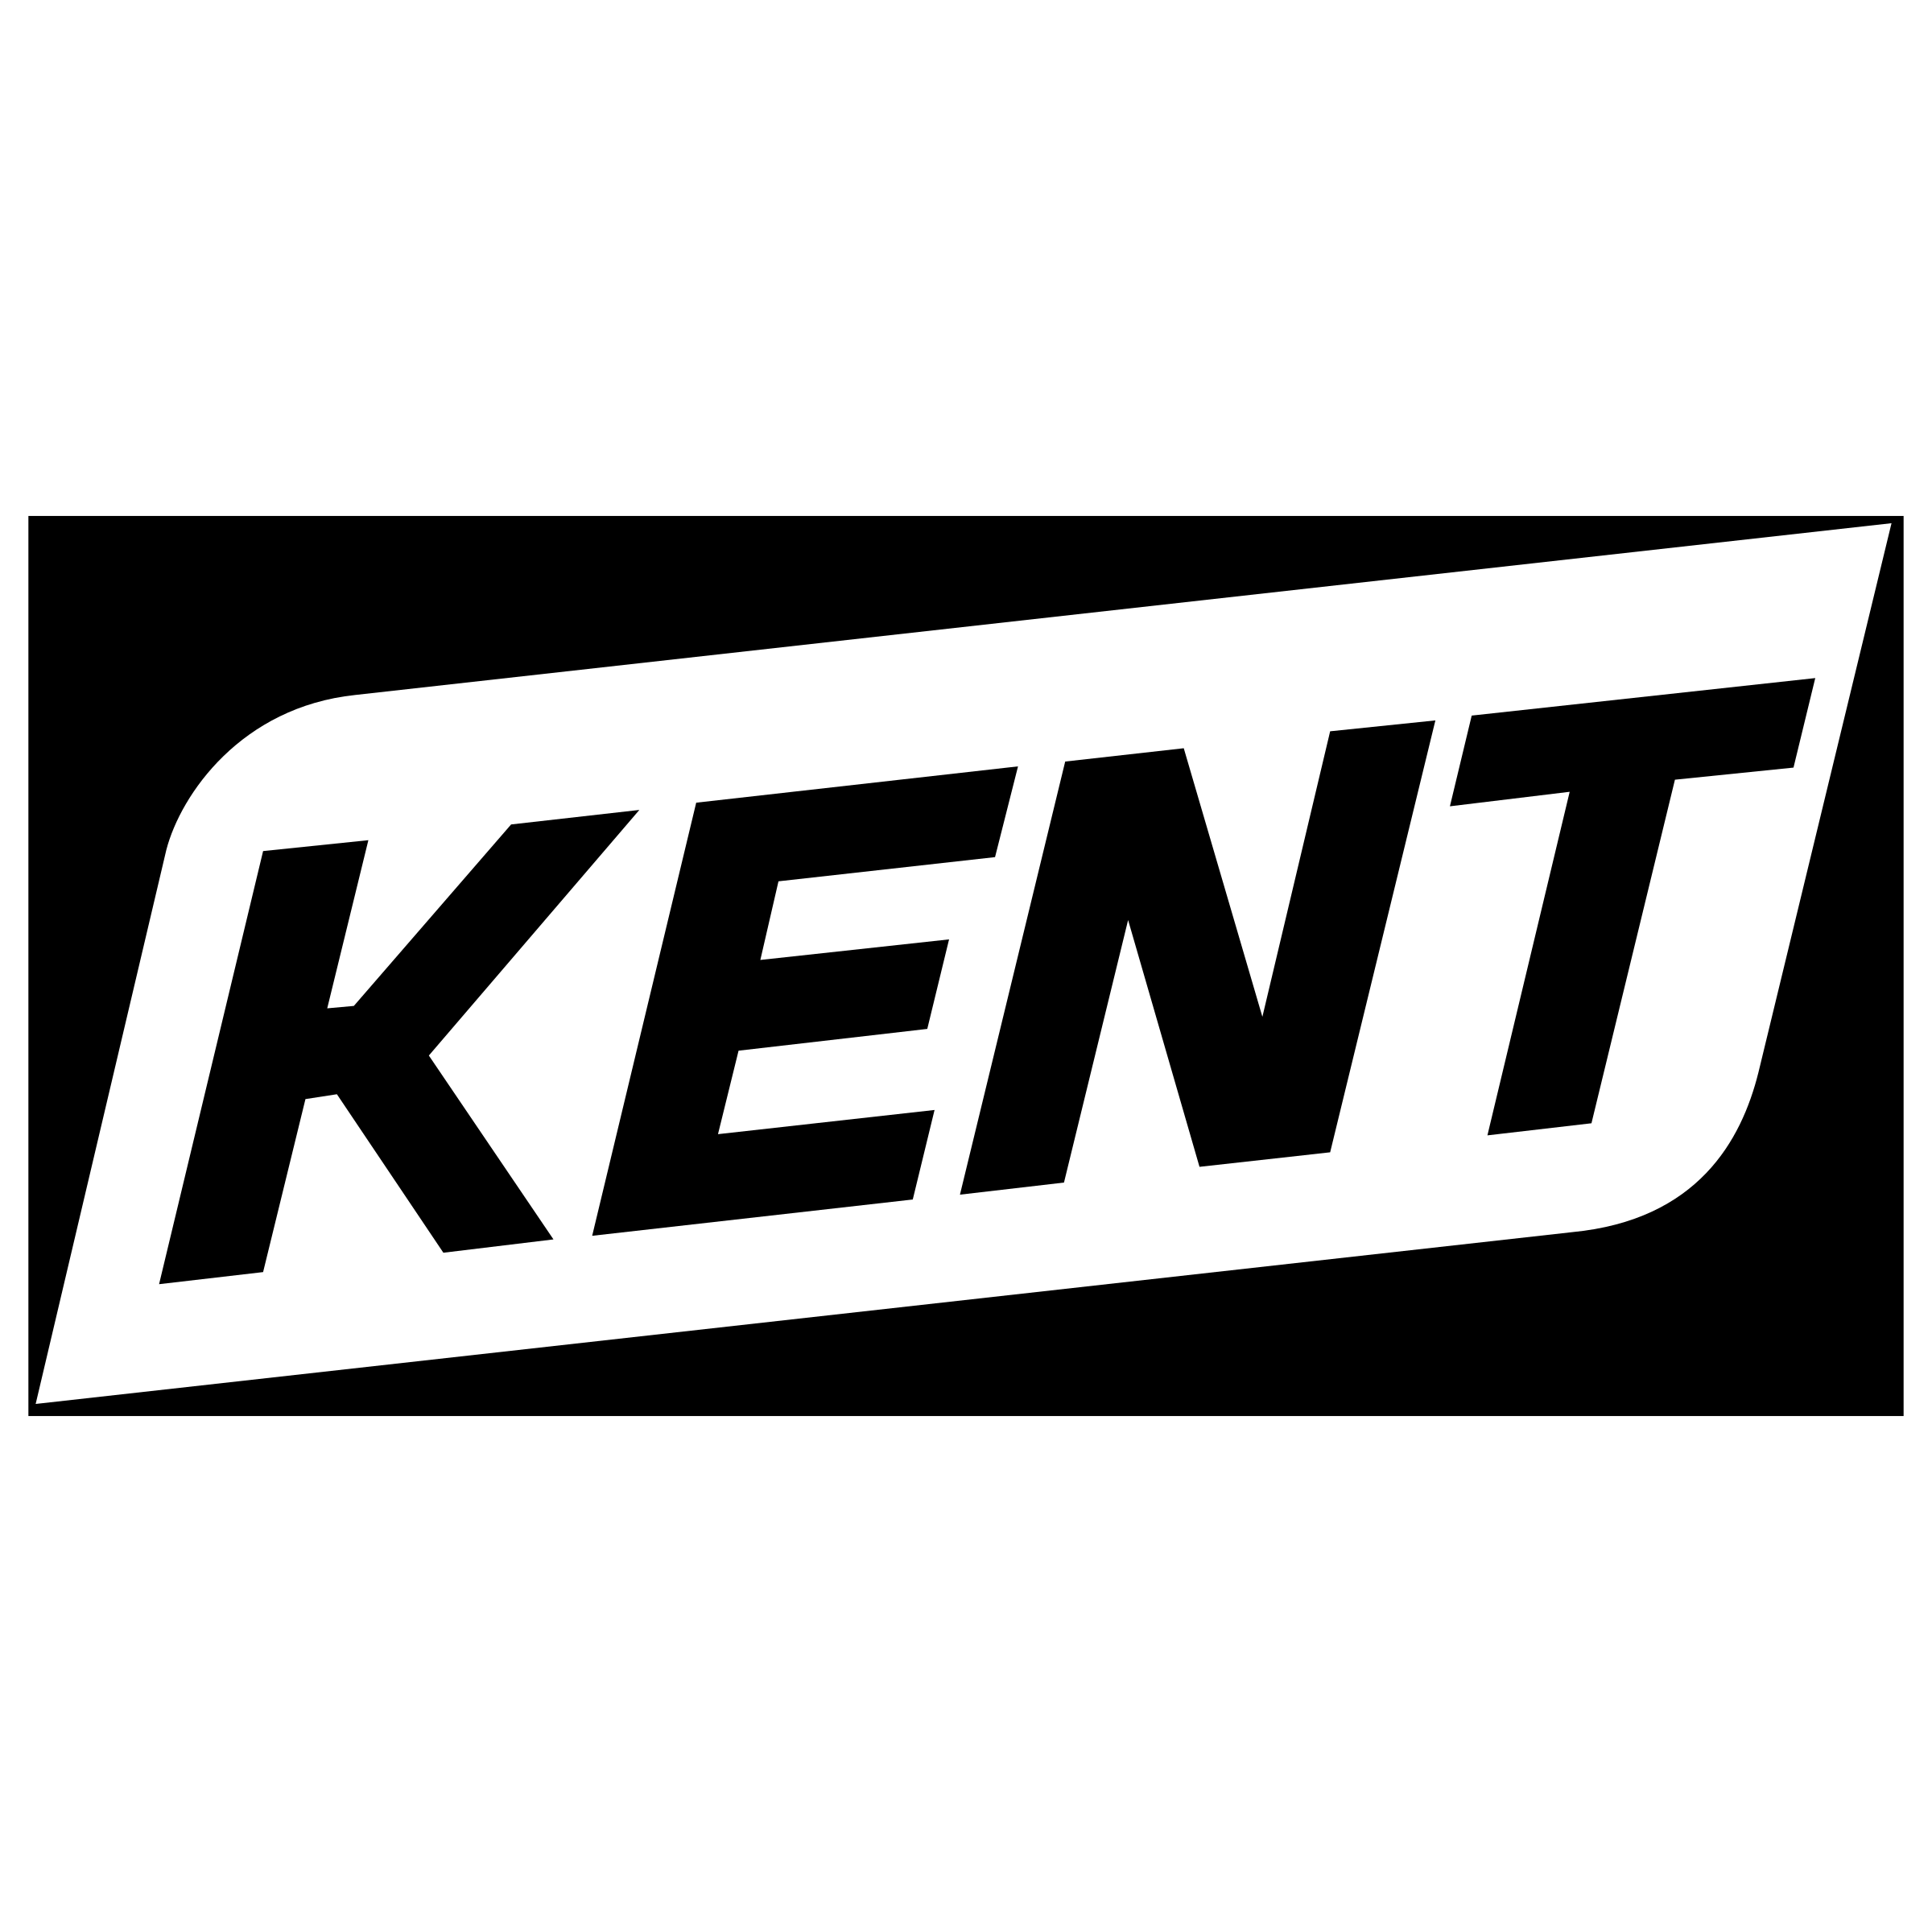 Kent Logo - Kent Logo PNG Transparent & SVG Vector - Freebie Supply